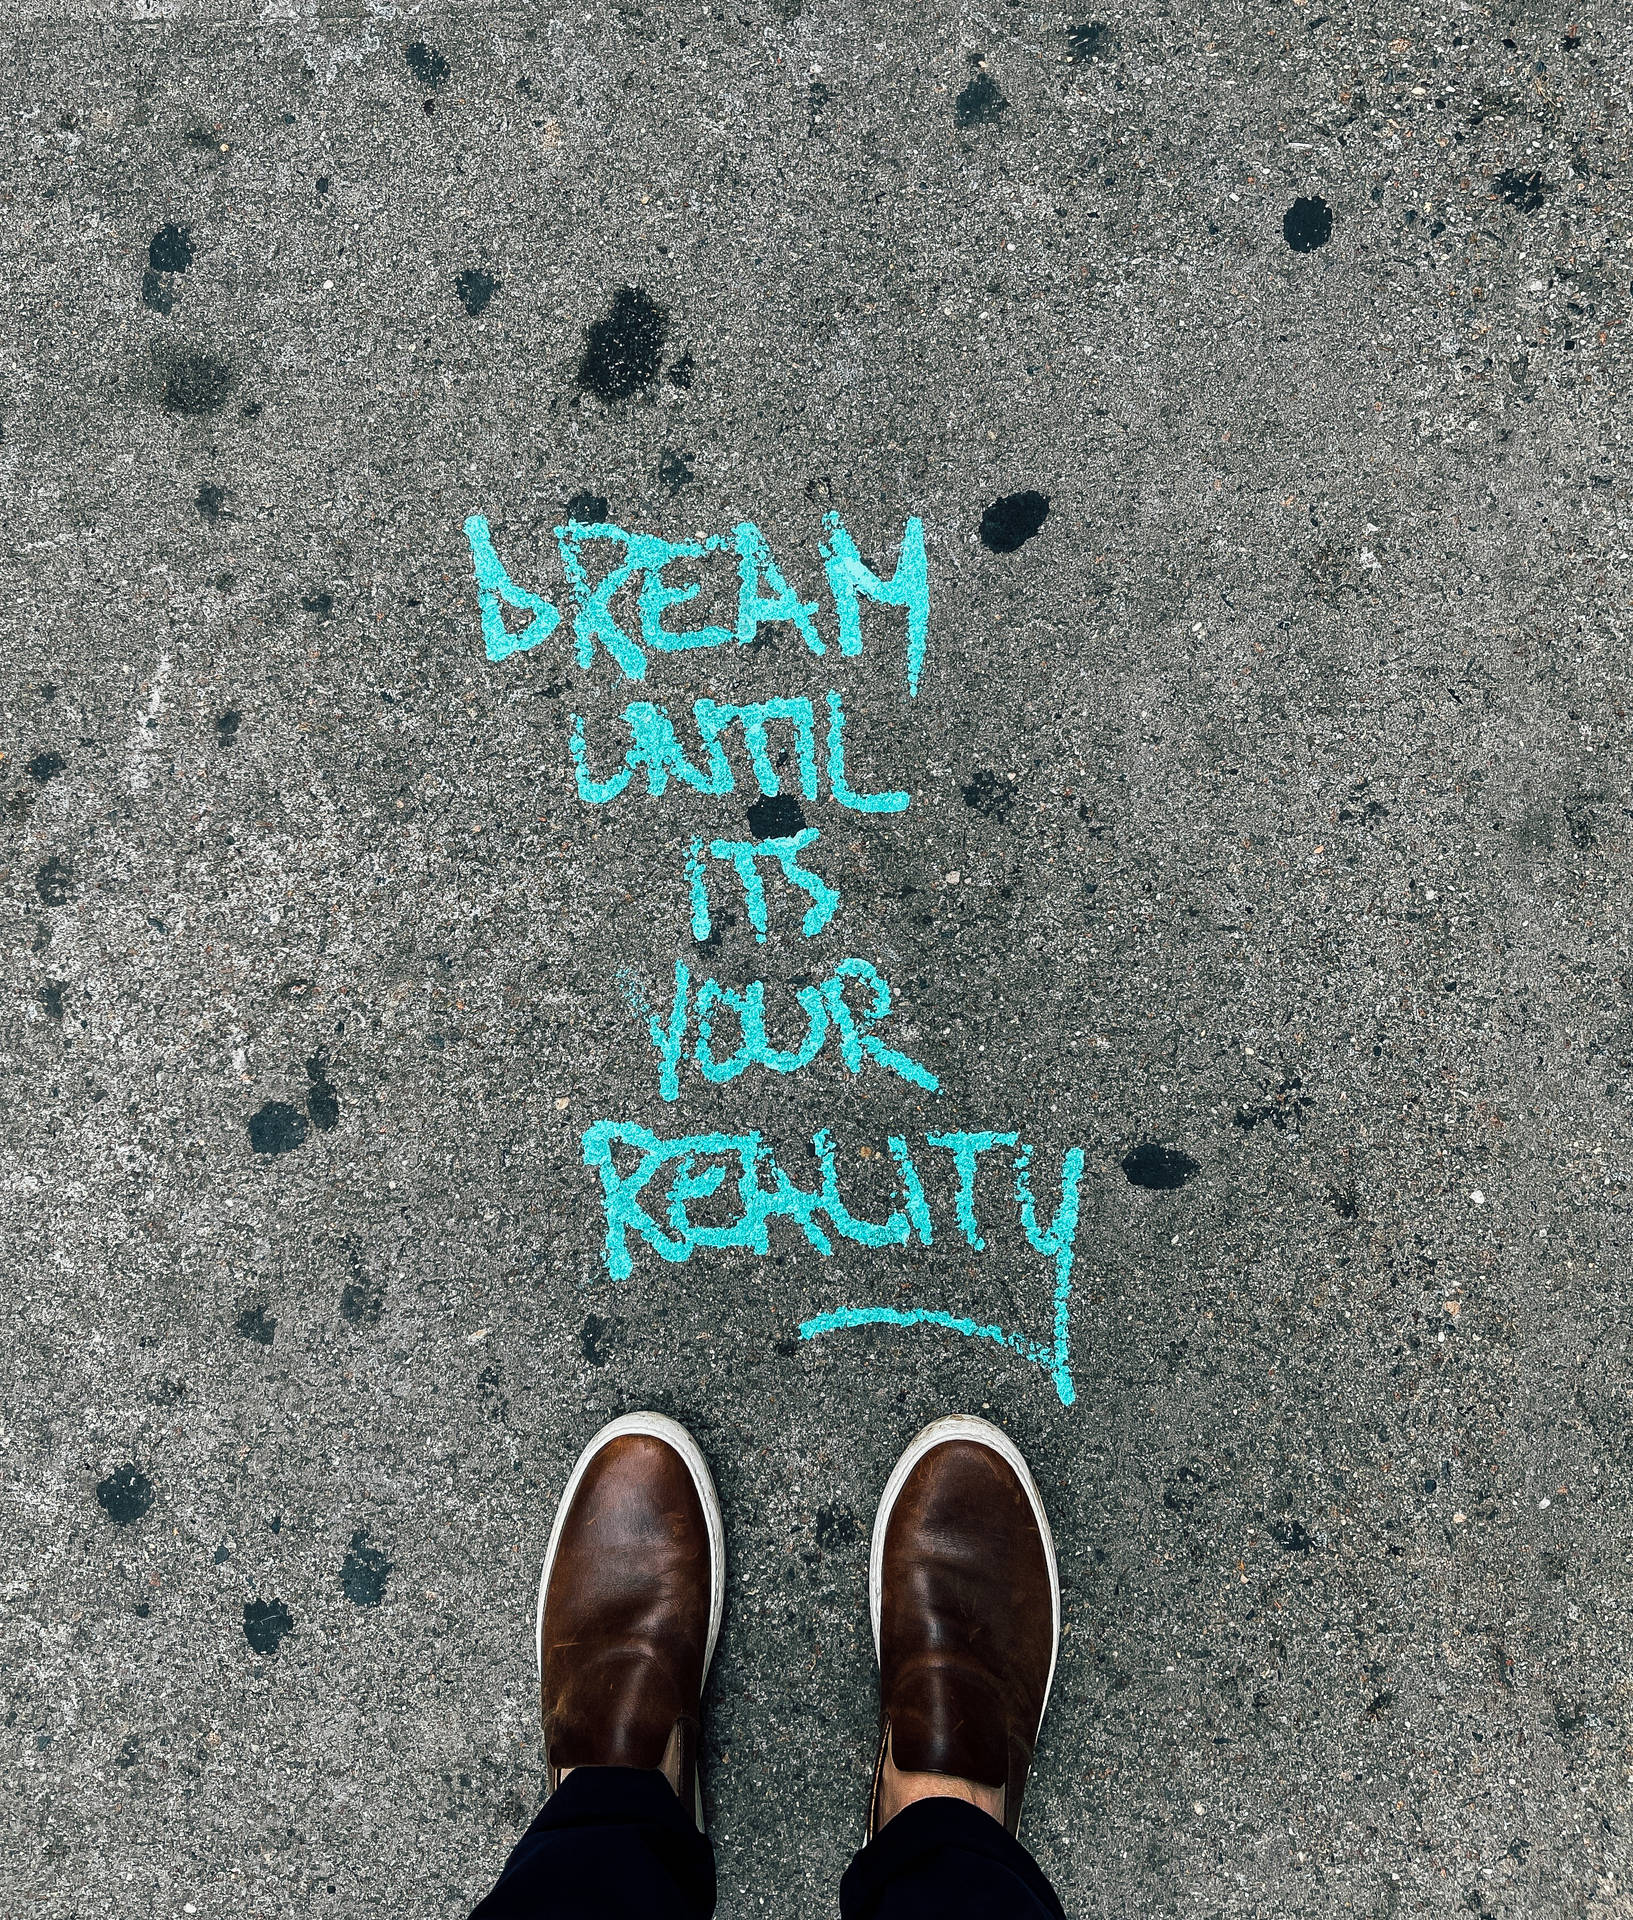 Motivational Dream Quote Wallpaper